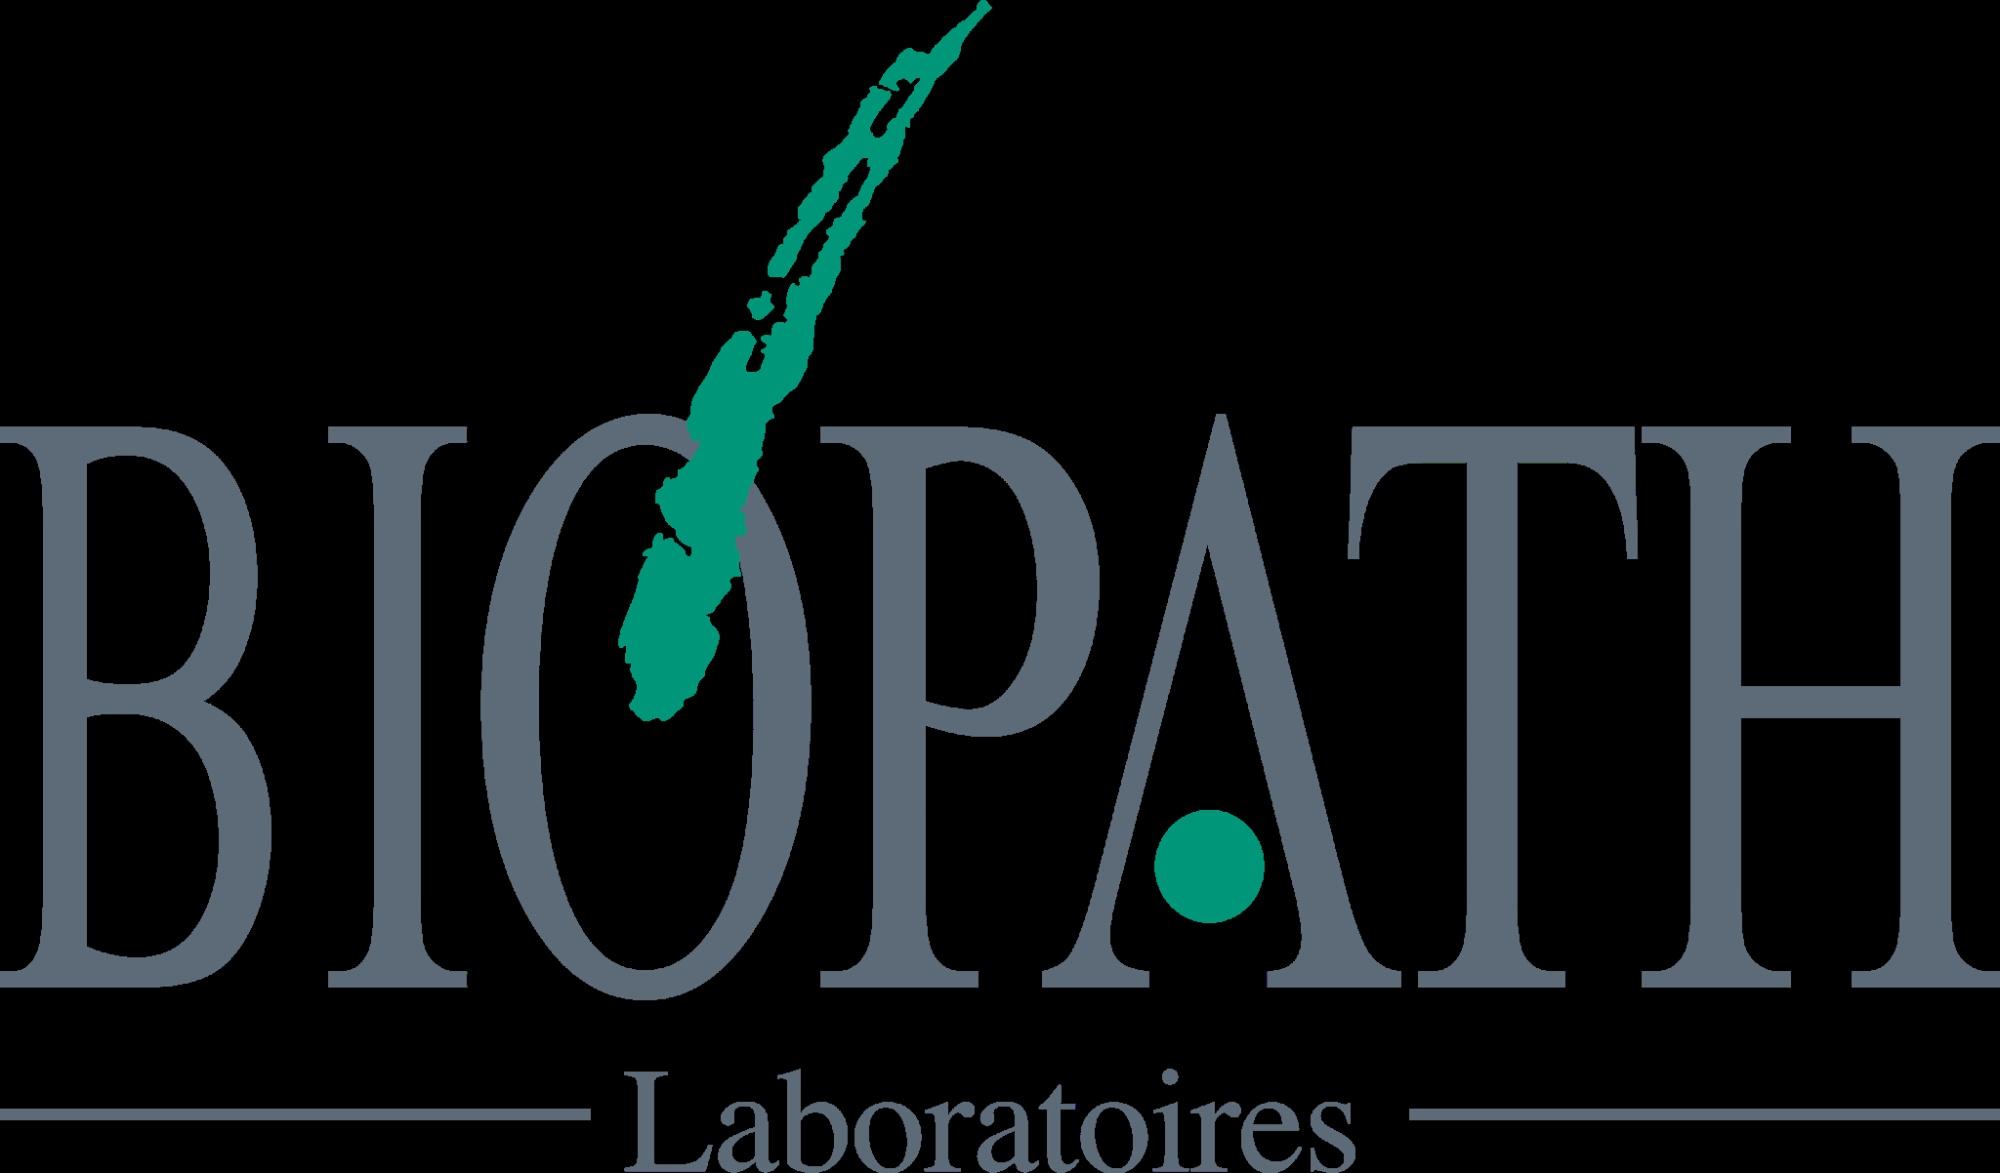 Biopath Laboratoires Doullens